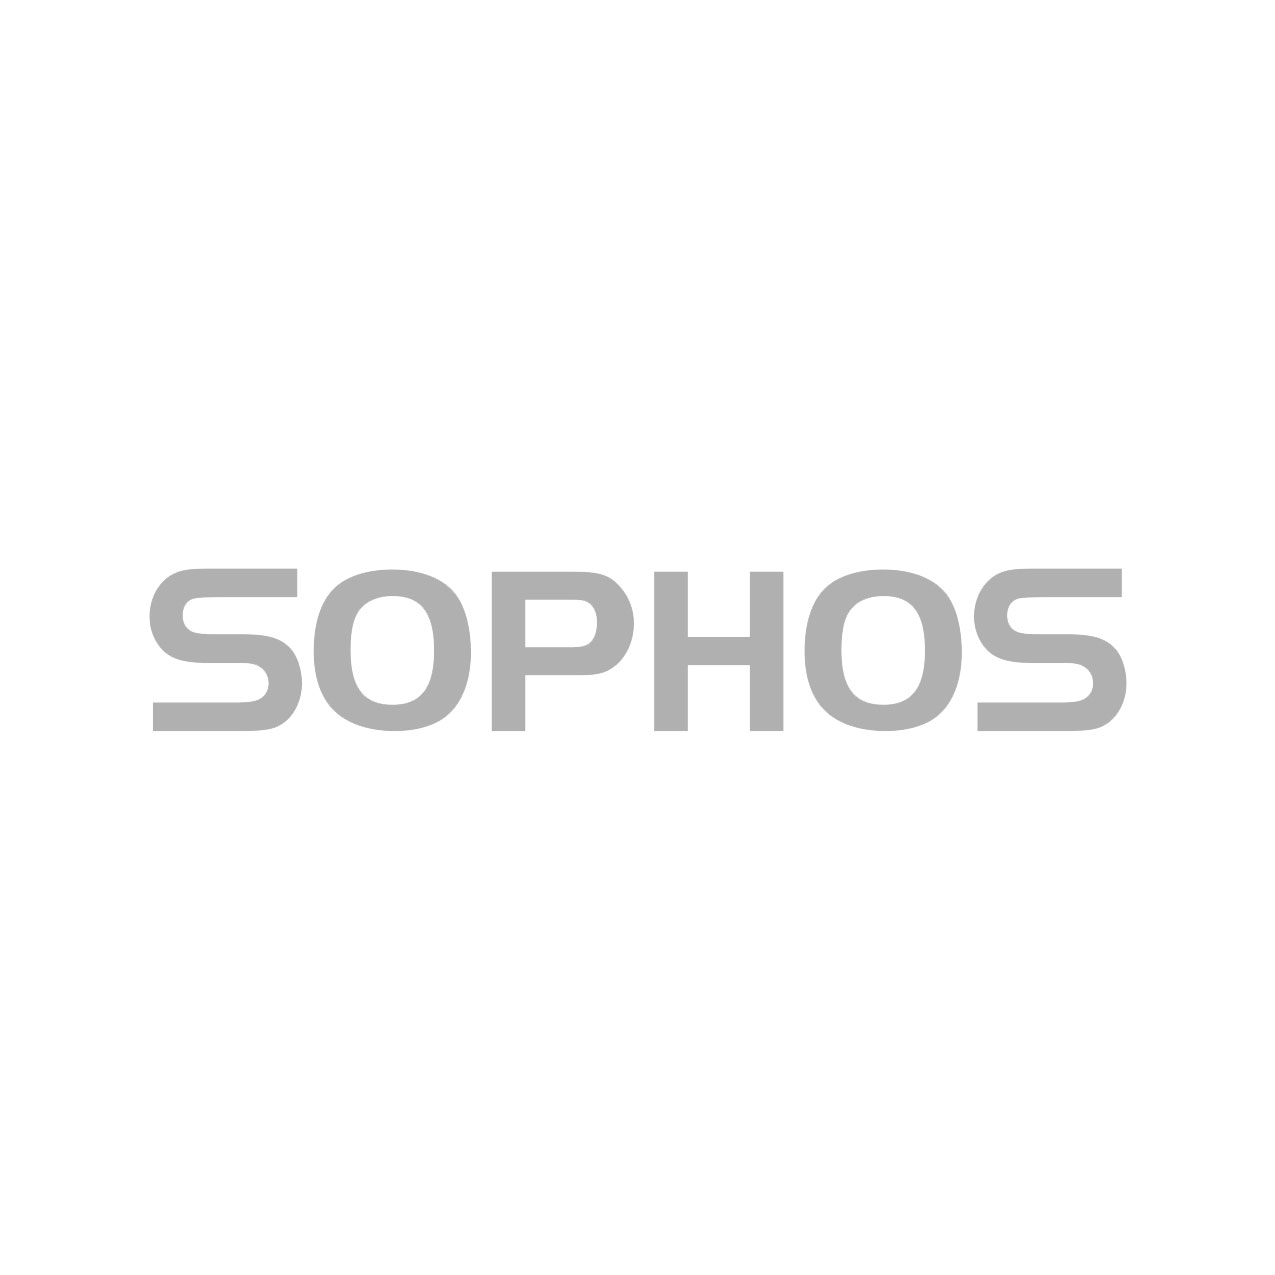 sophos logo gray